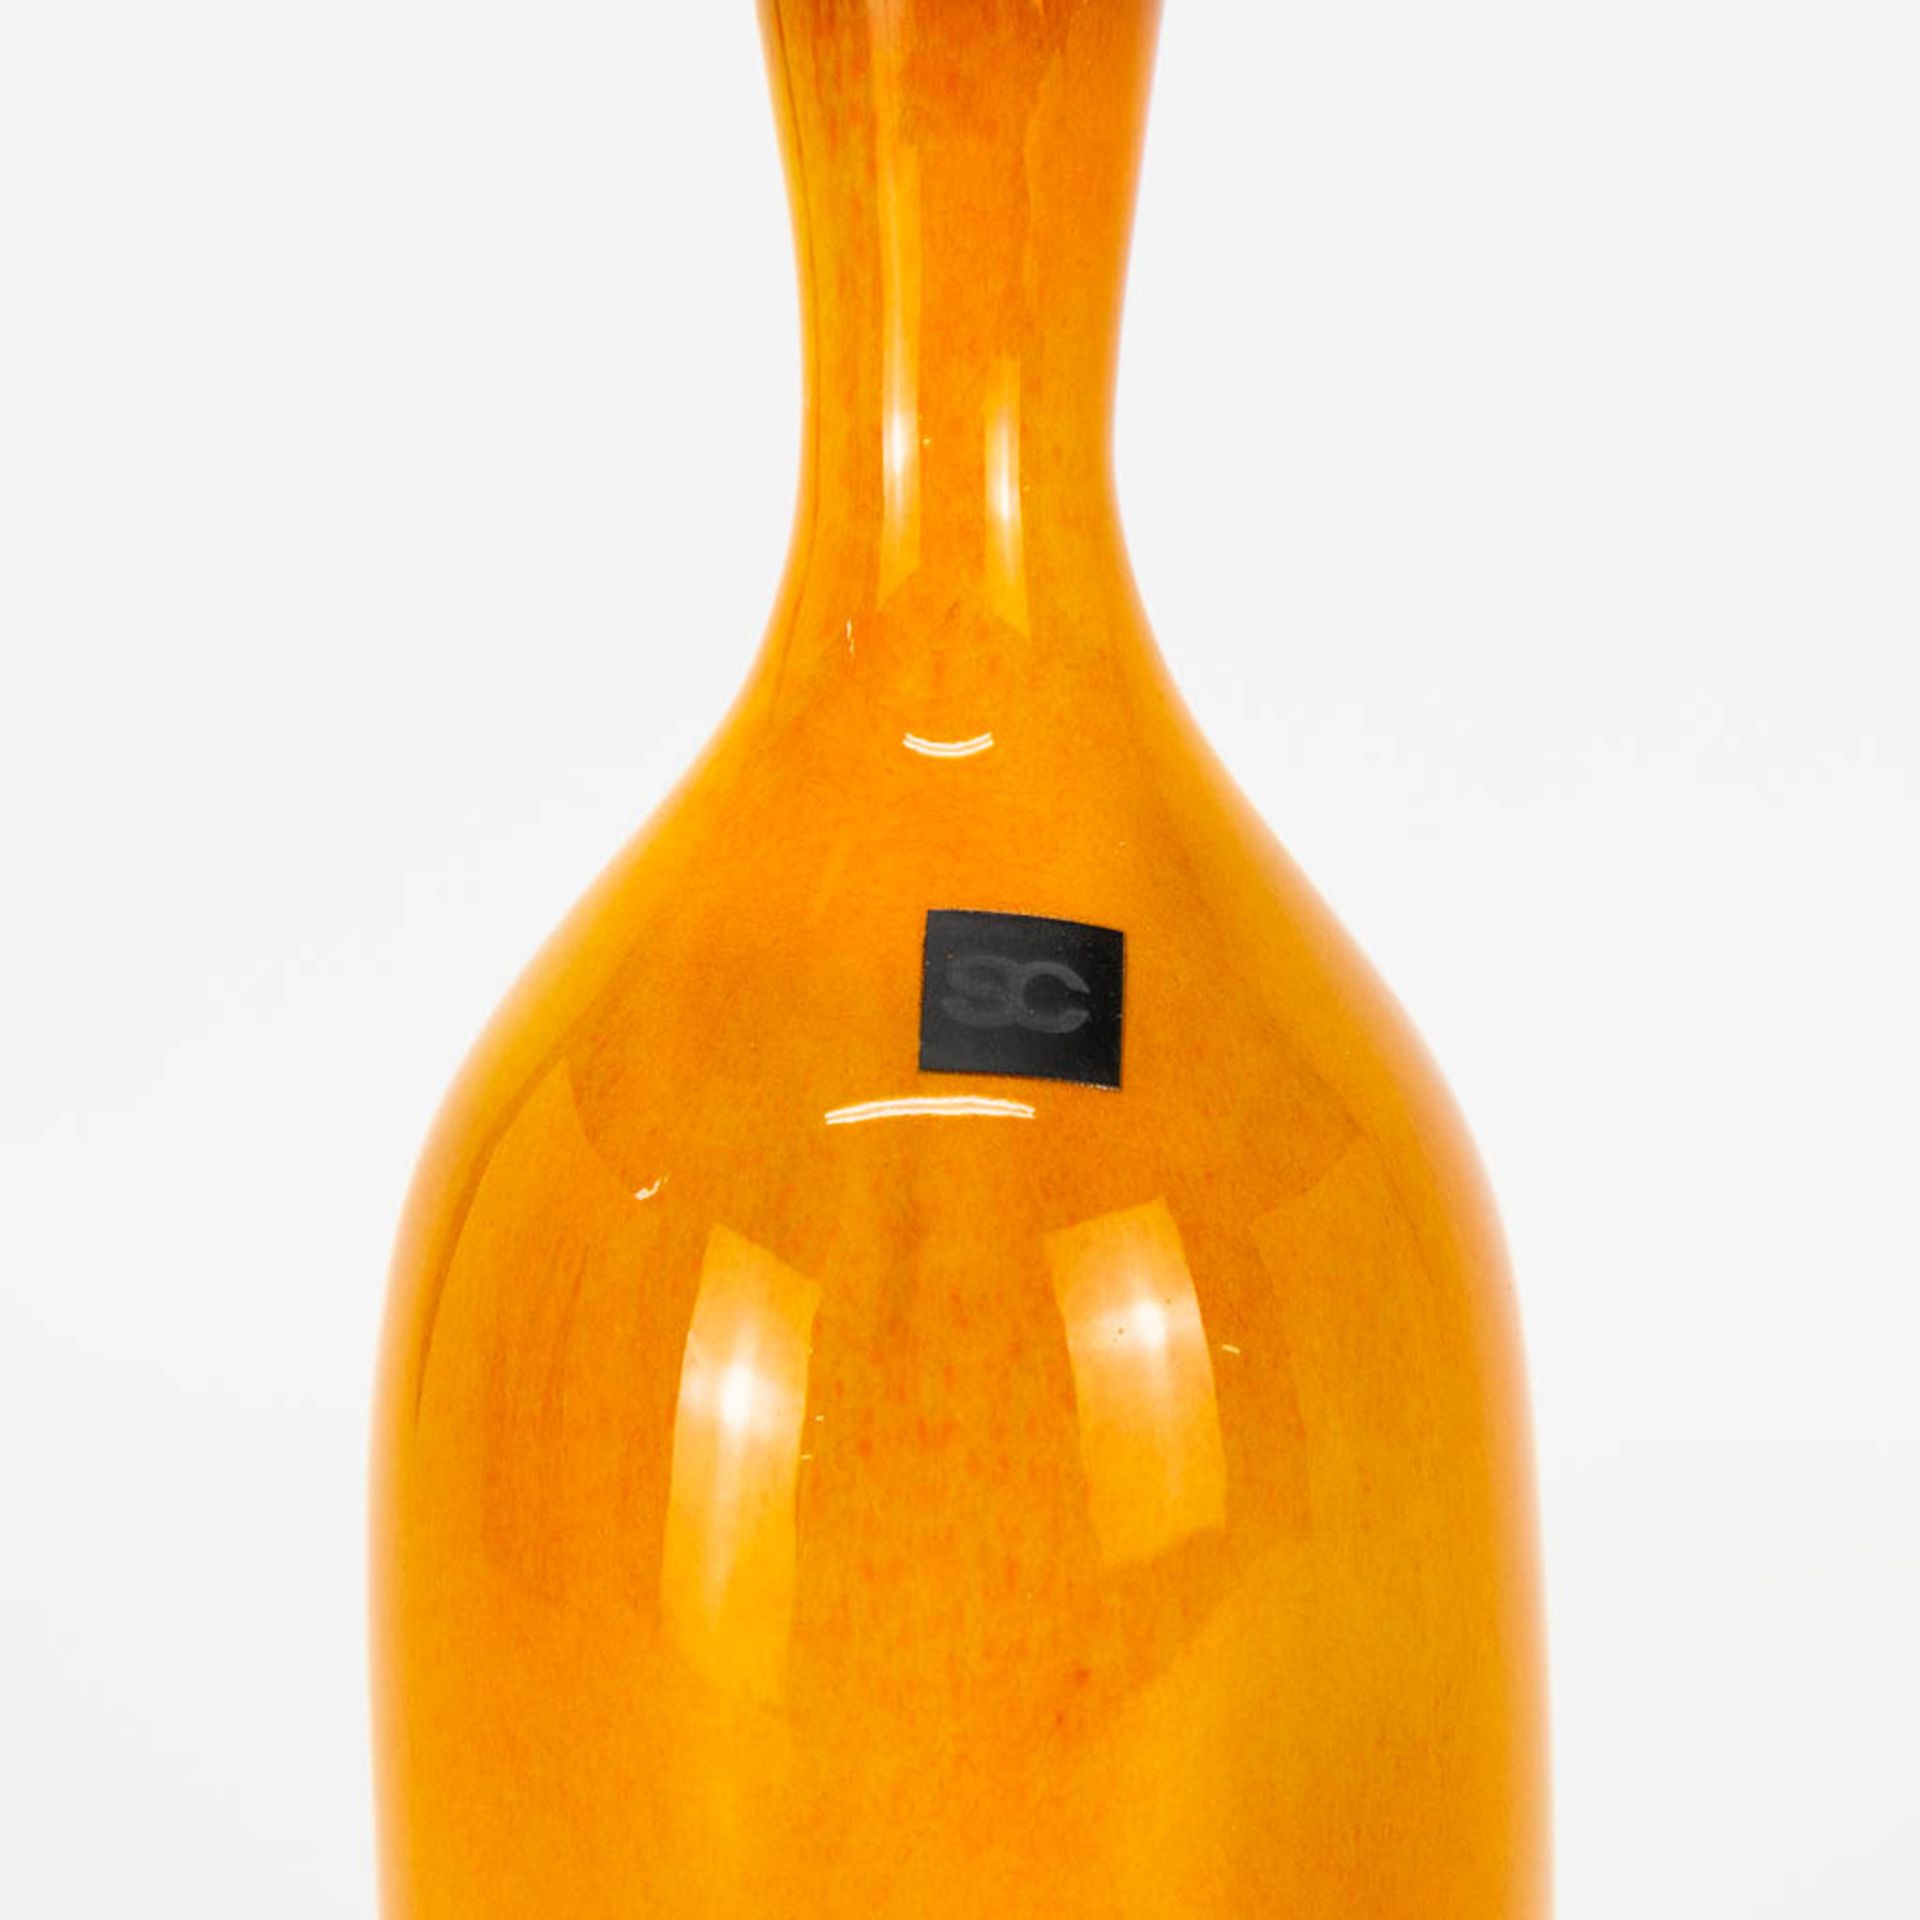 Jacques and Dani RUELLAND (XX-XXI) a soliflore vase with orange glaze. (15 x 6 cm) - Image 4 of 12